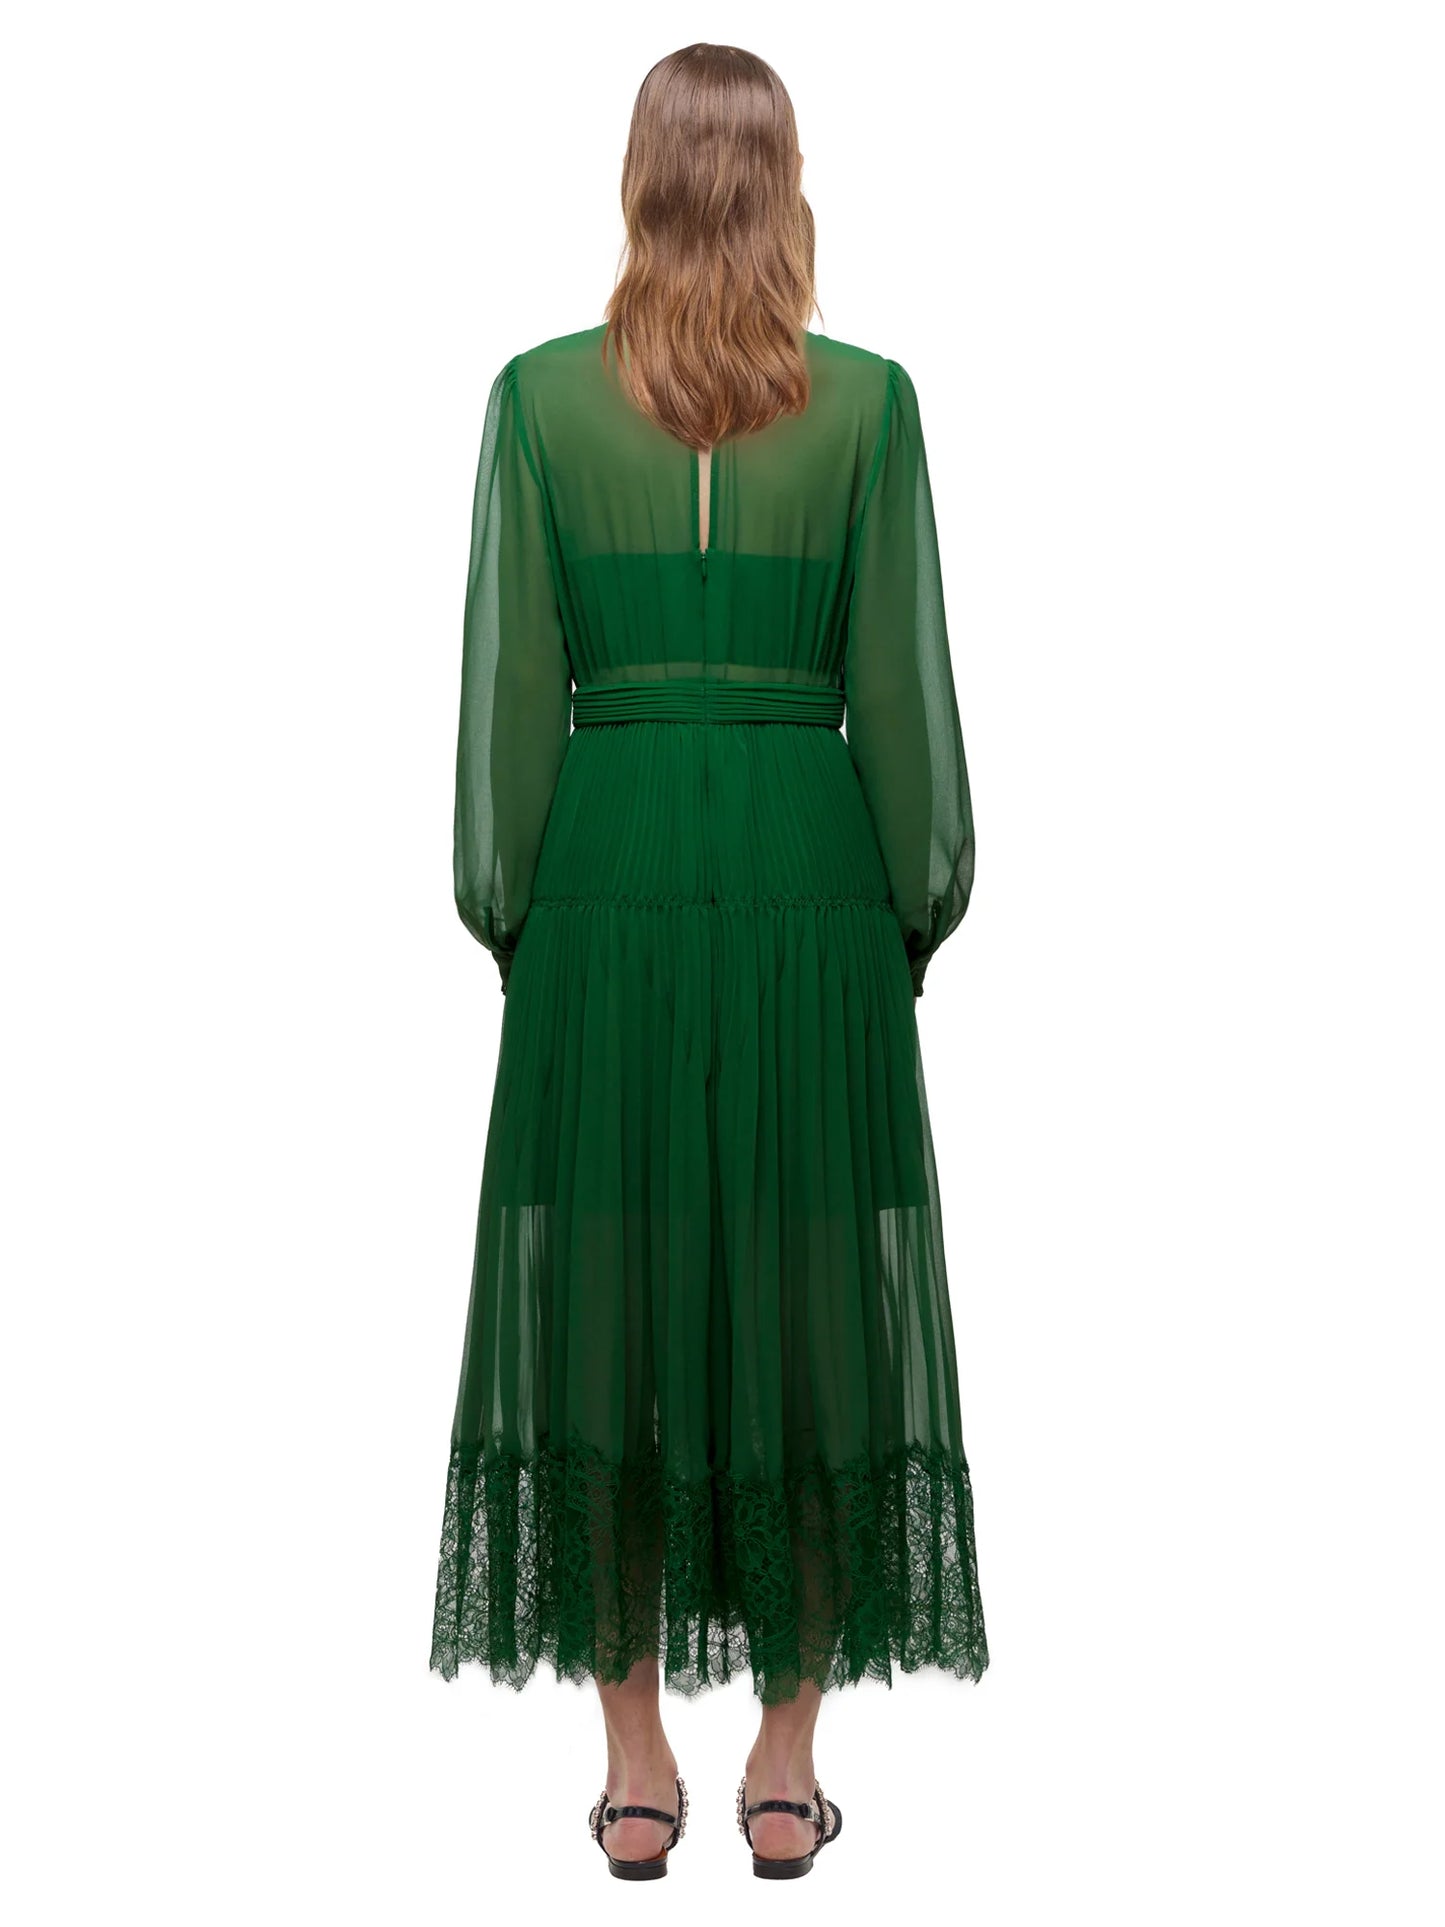 Green Chiffon Trimmed Dress